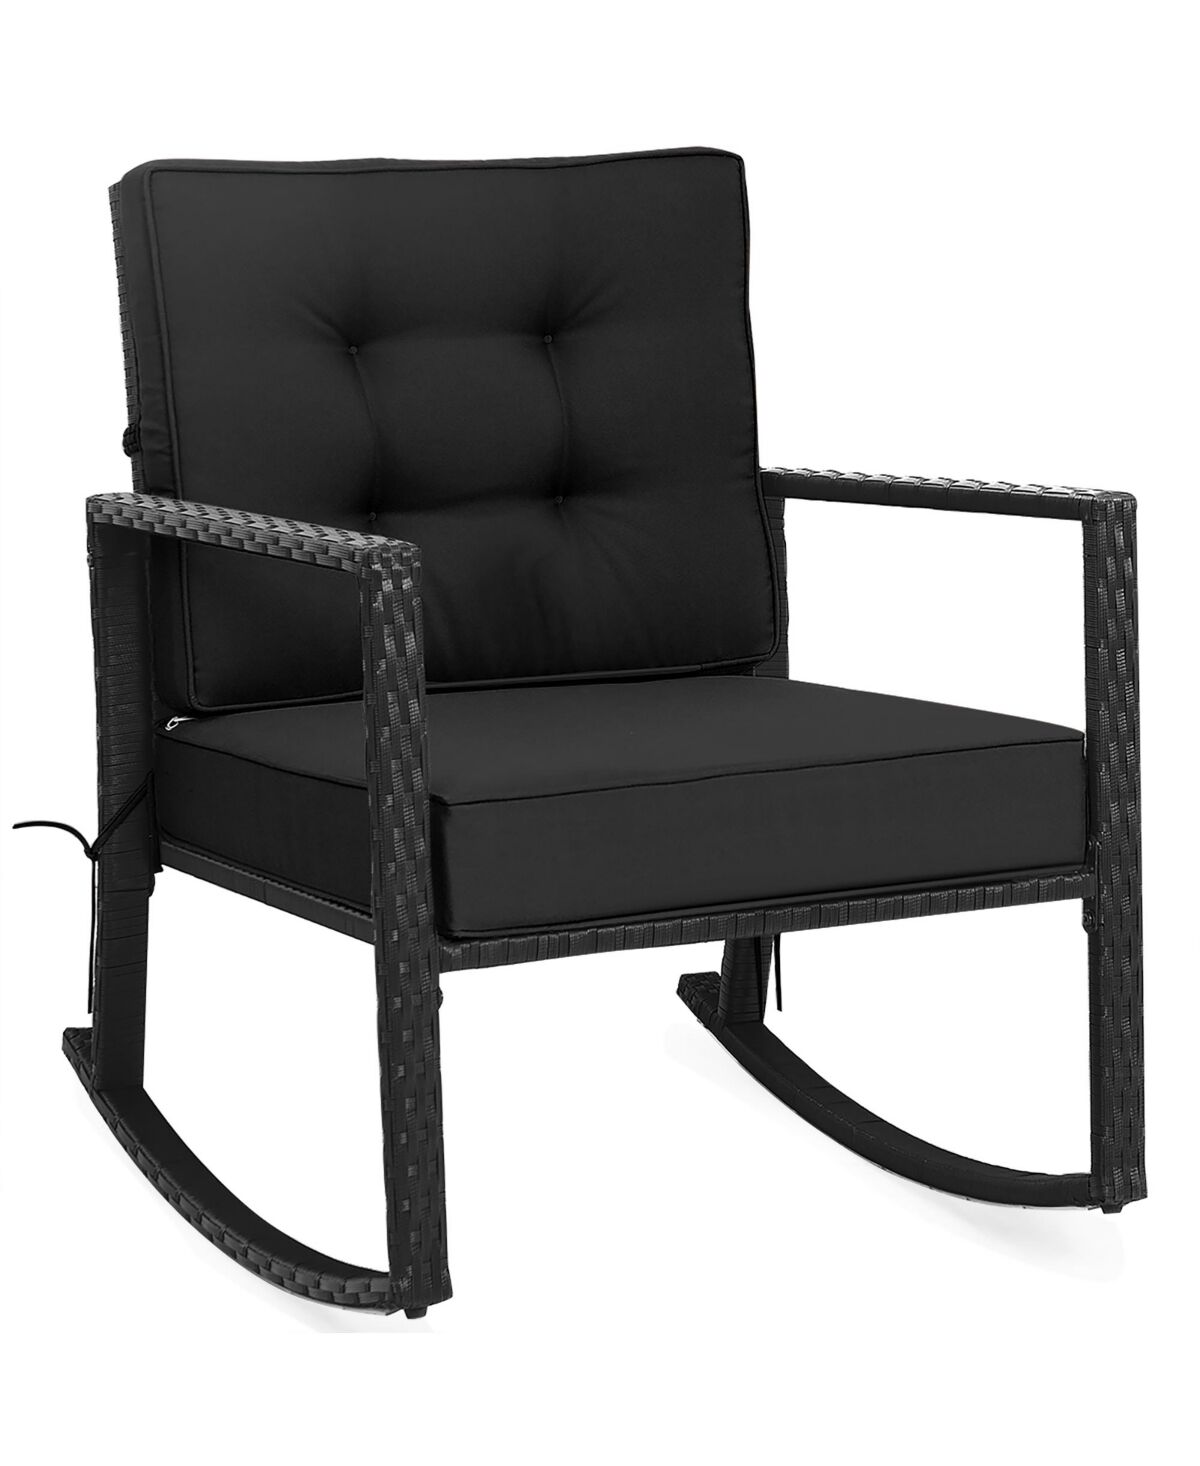 Costway Patio Rattan Rocker Chair Outdoor Glider Rocking Chair Cushion Lawn - Black